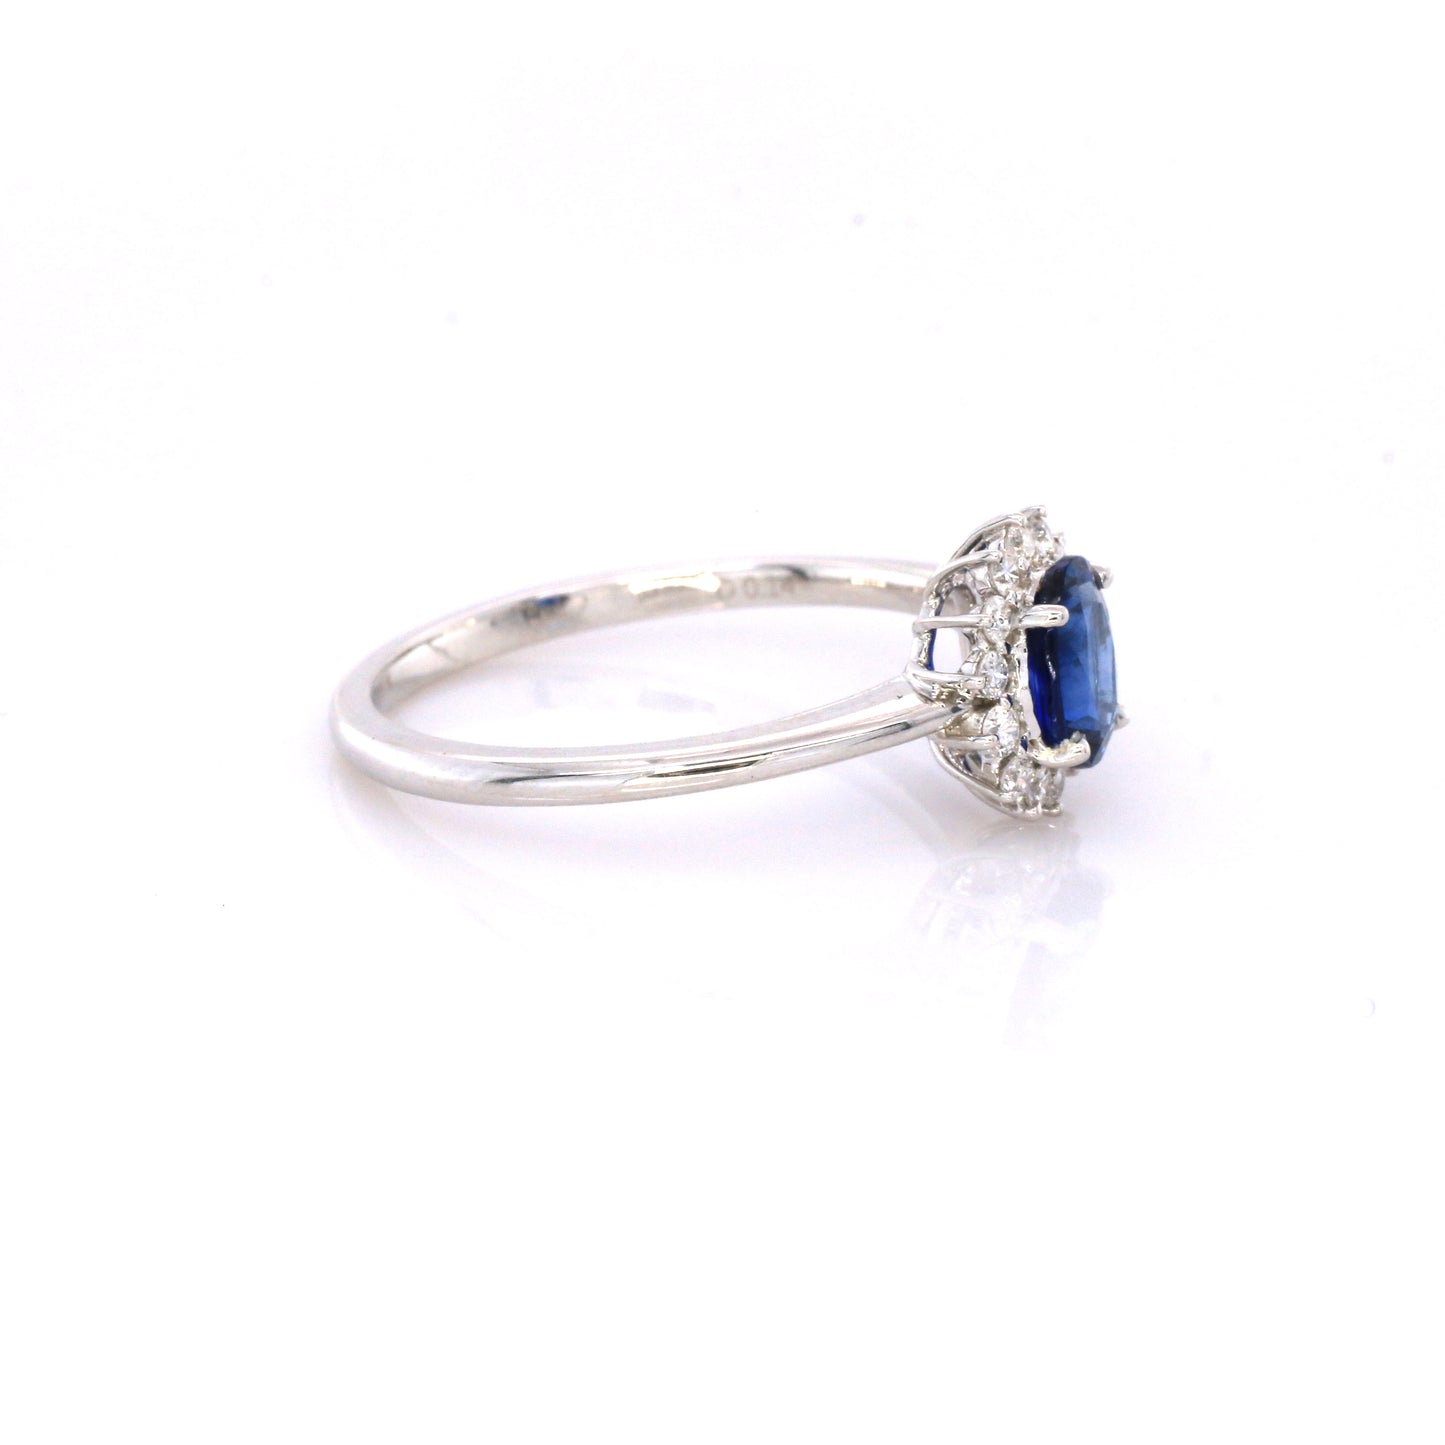 Cluster Blue Sapphire & Diamond Ring - 18K White Gold 2.47gm